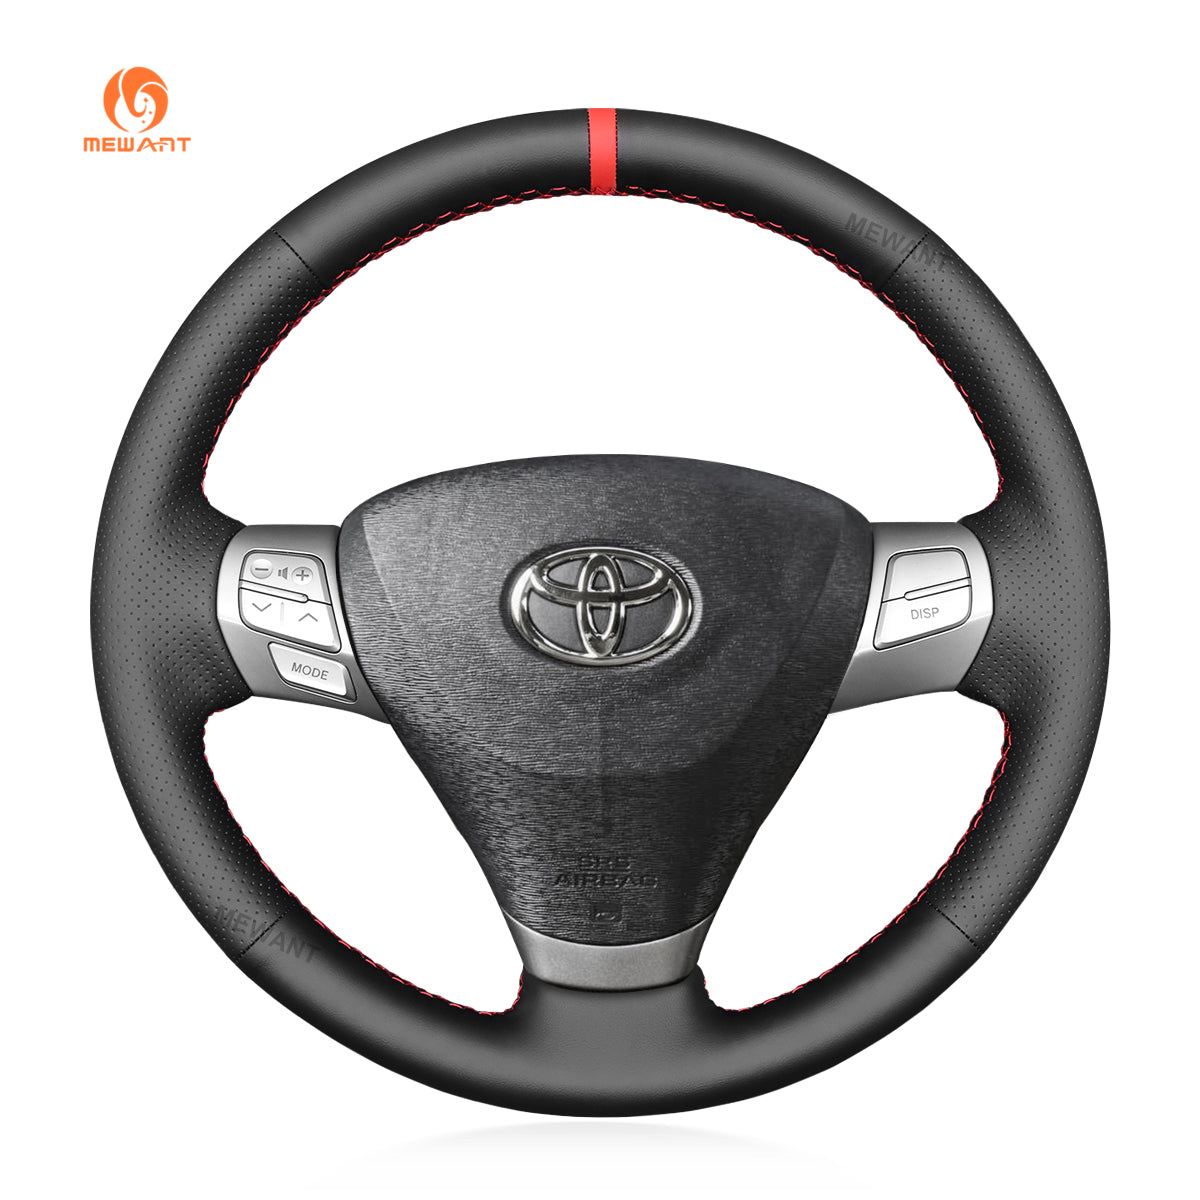 MEWANT Car Steering Wheel Cover for Toyota Solara (Camry Solara) 2007-2008 / Venza 2009-2012